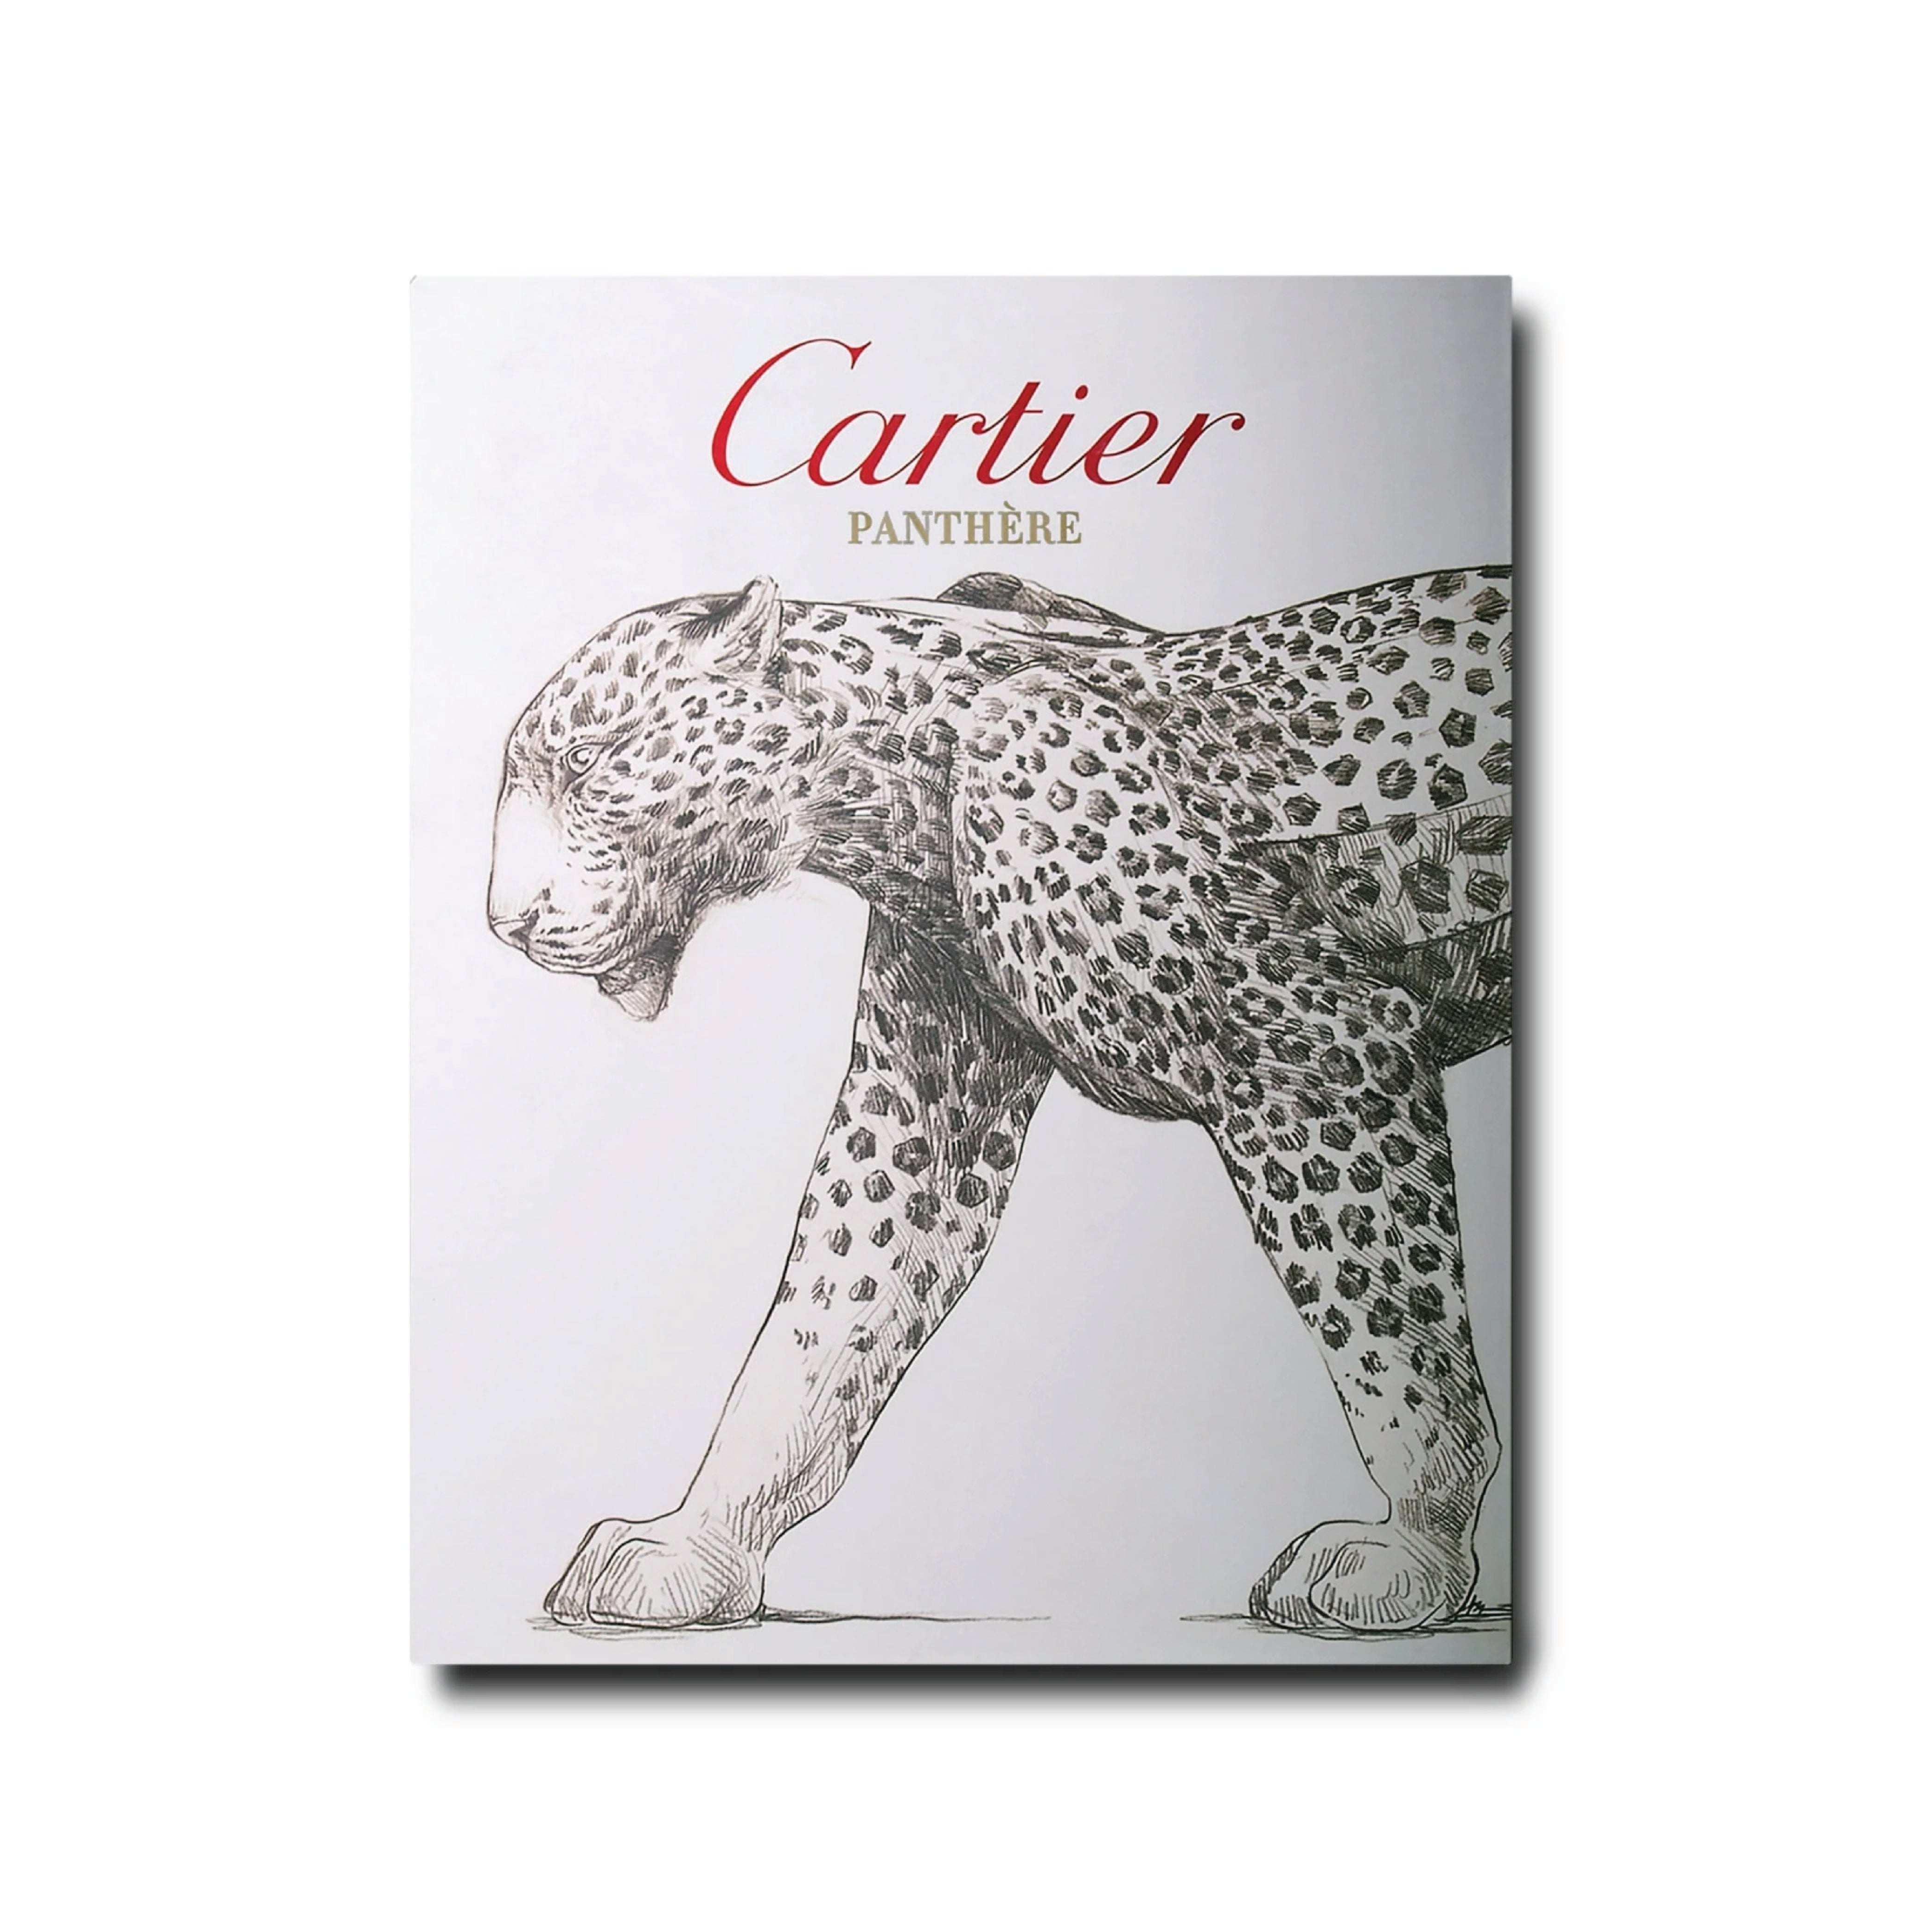 Cartier Panthère - Hardcover